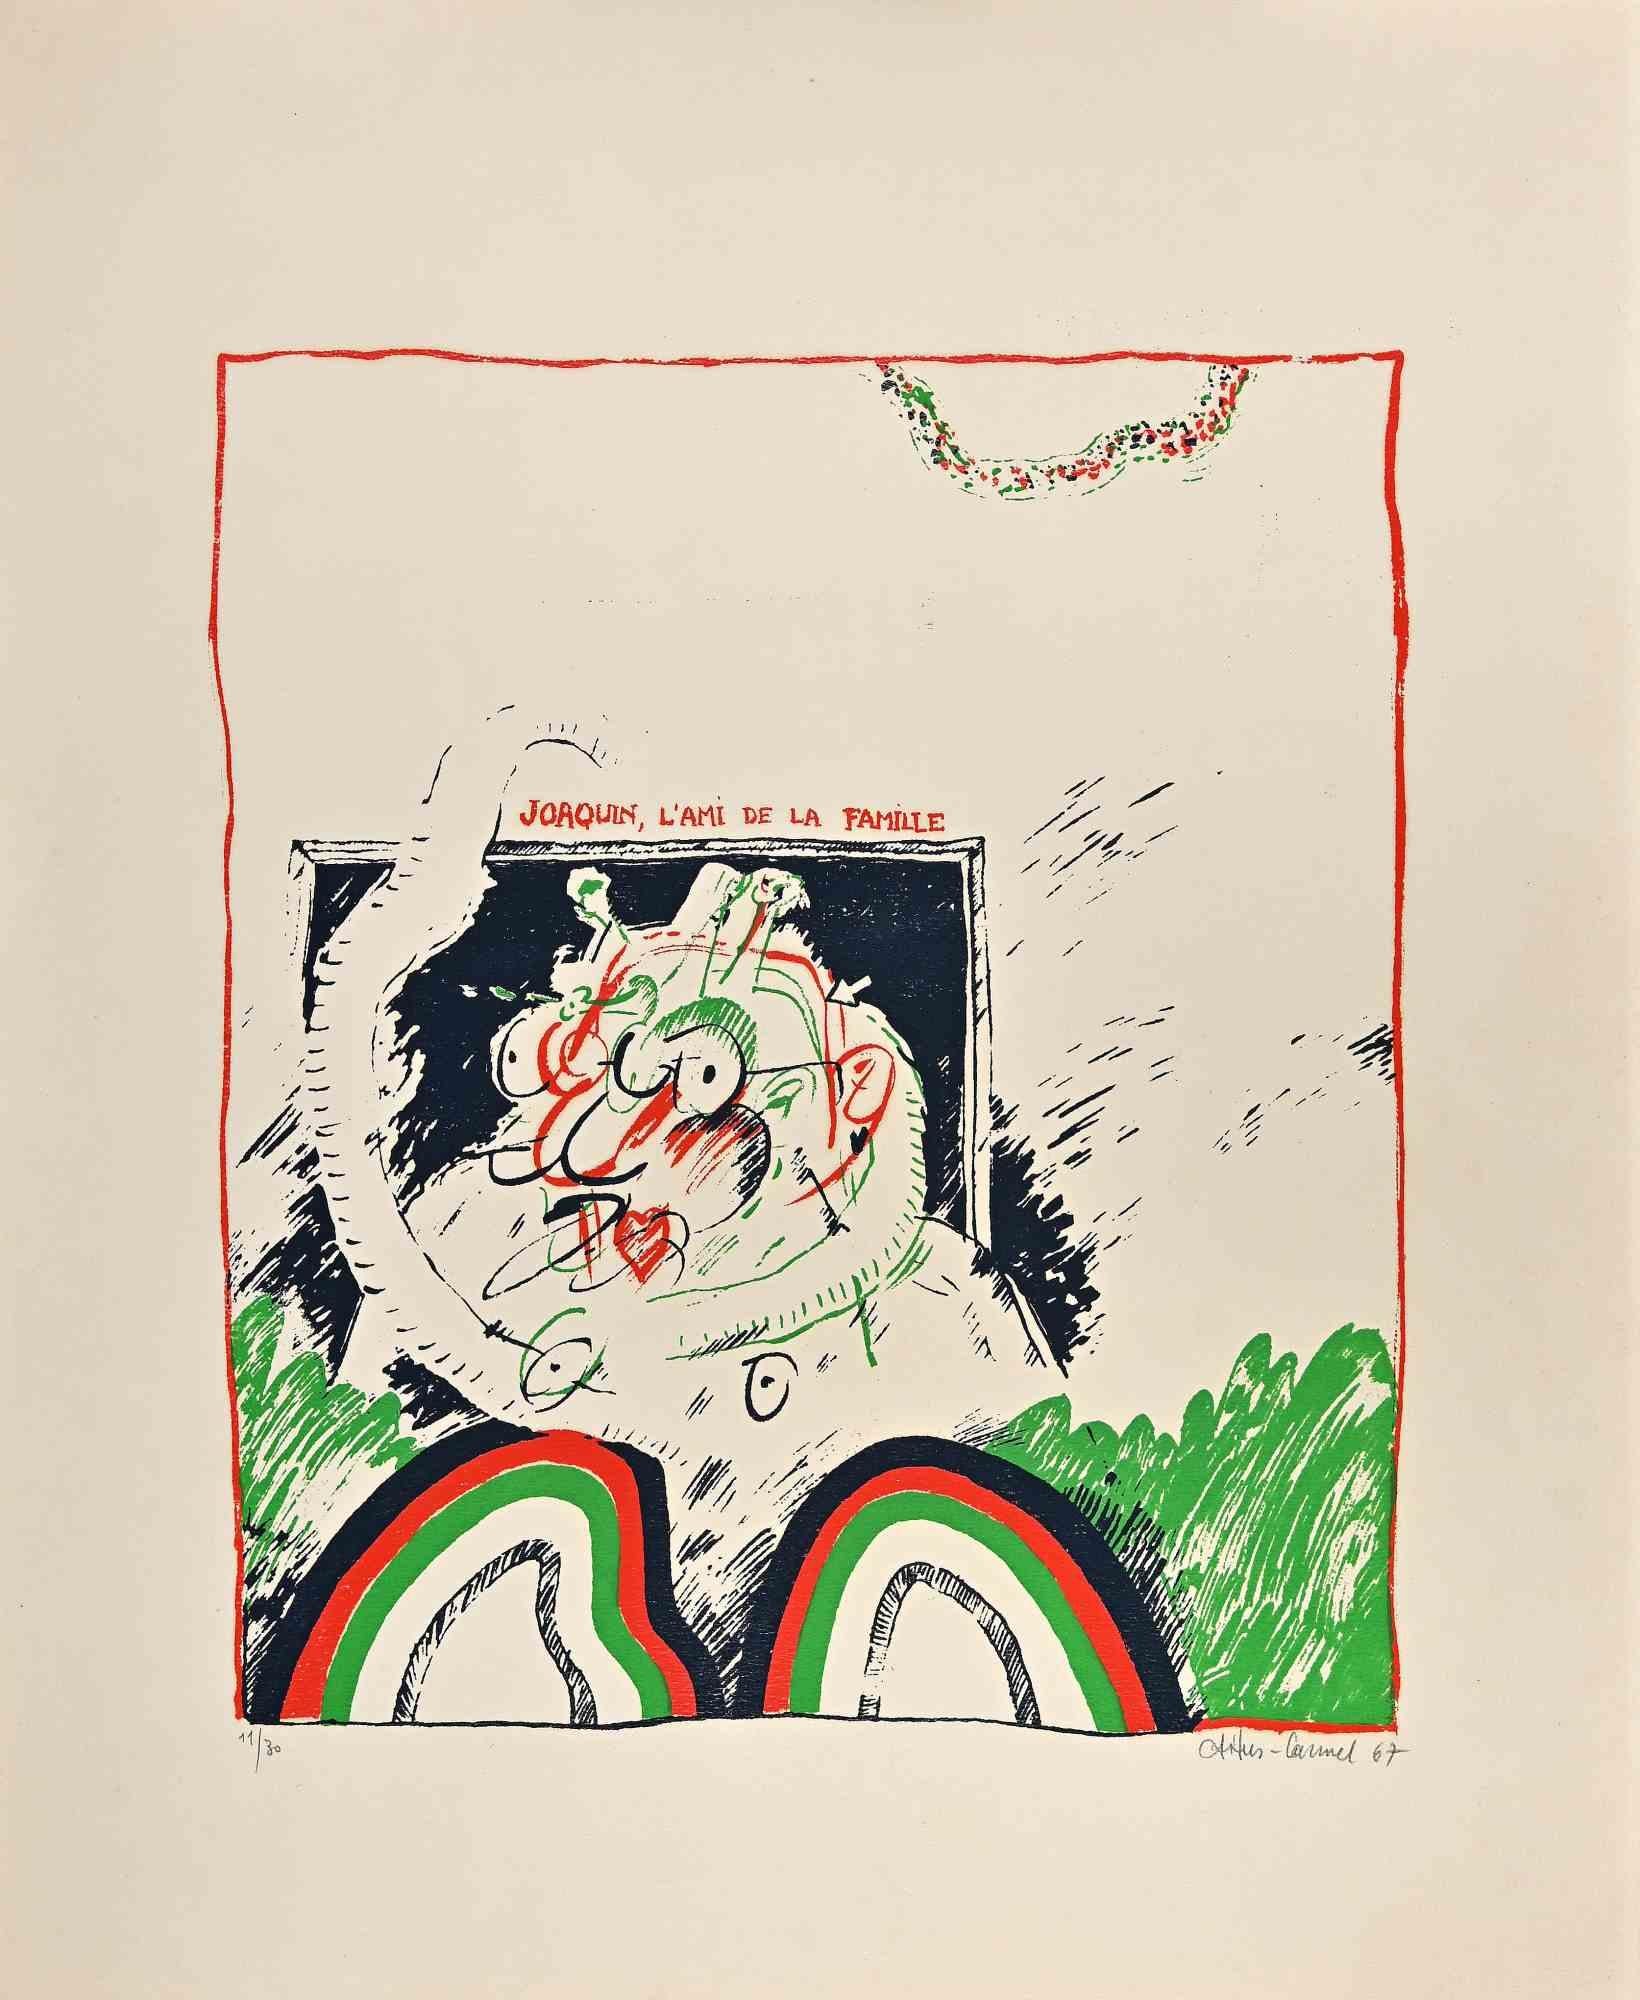 Gerard Titus-Carmel Abstract Print - Joaquín -  Lithograph by Gérard Titus-Carmel- 1967